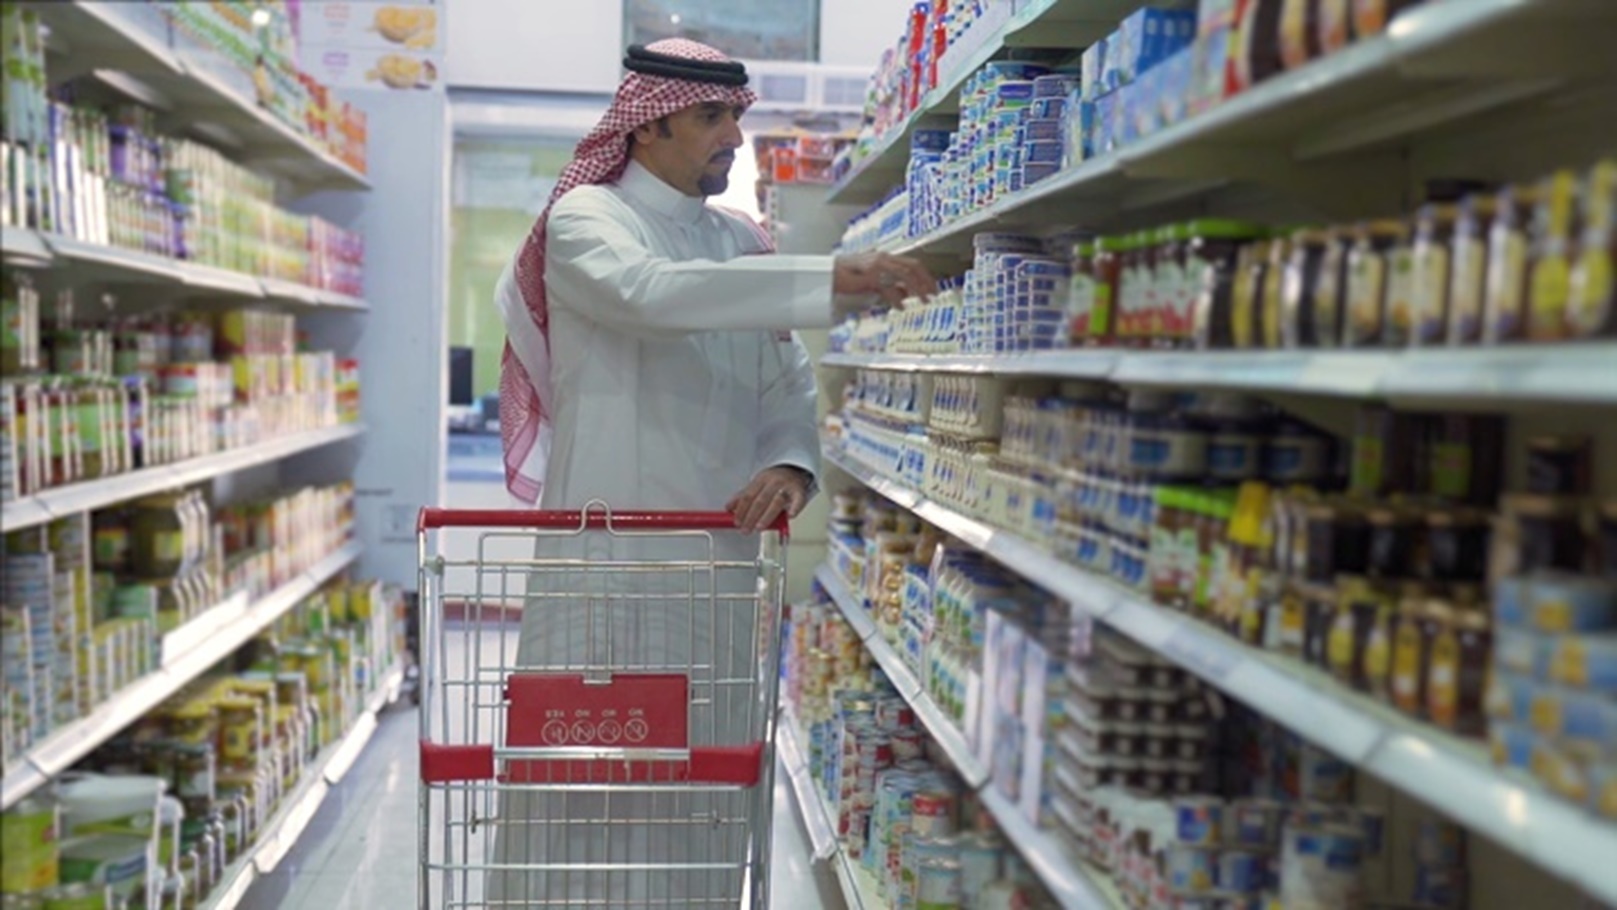 clip-14591-saudi-gulf-man-shopping-food-canning-section-inside-superma-thumbnail